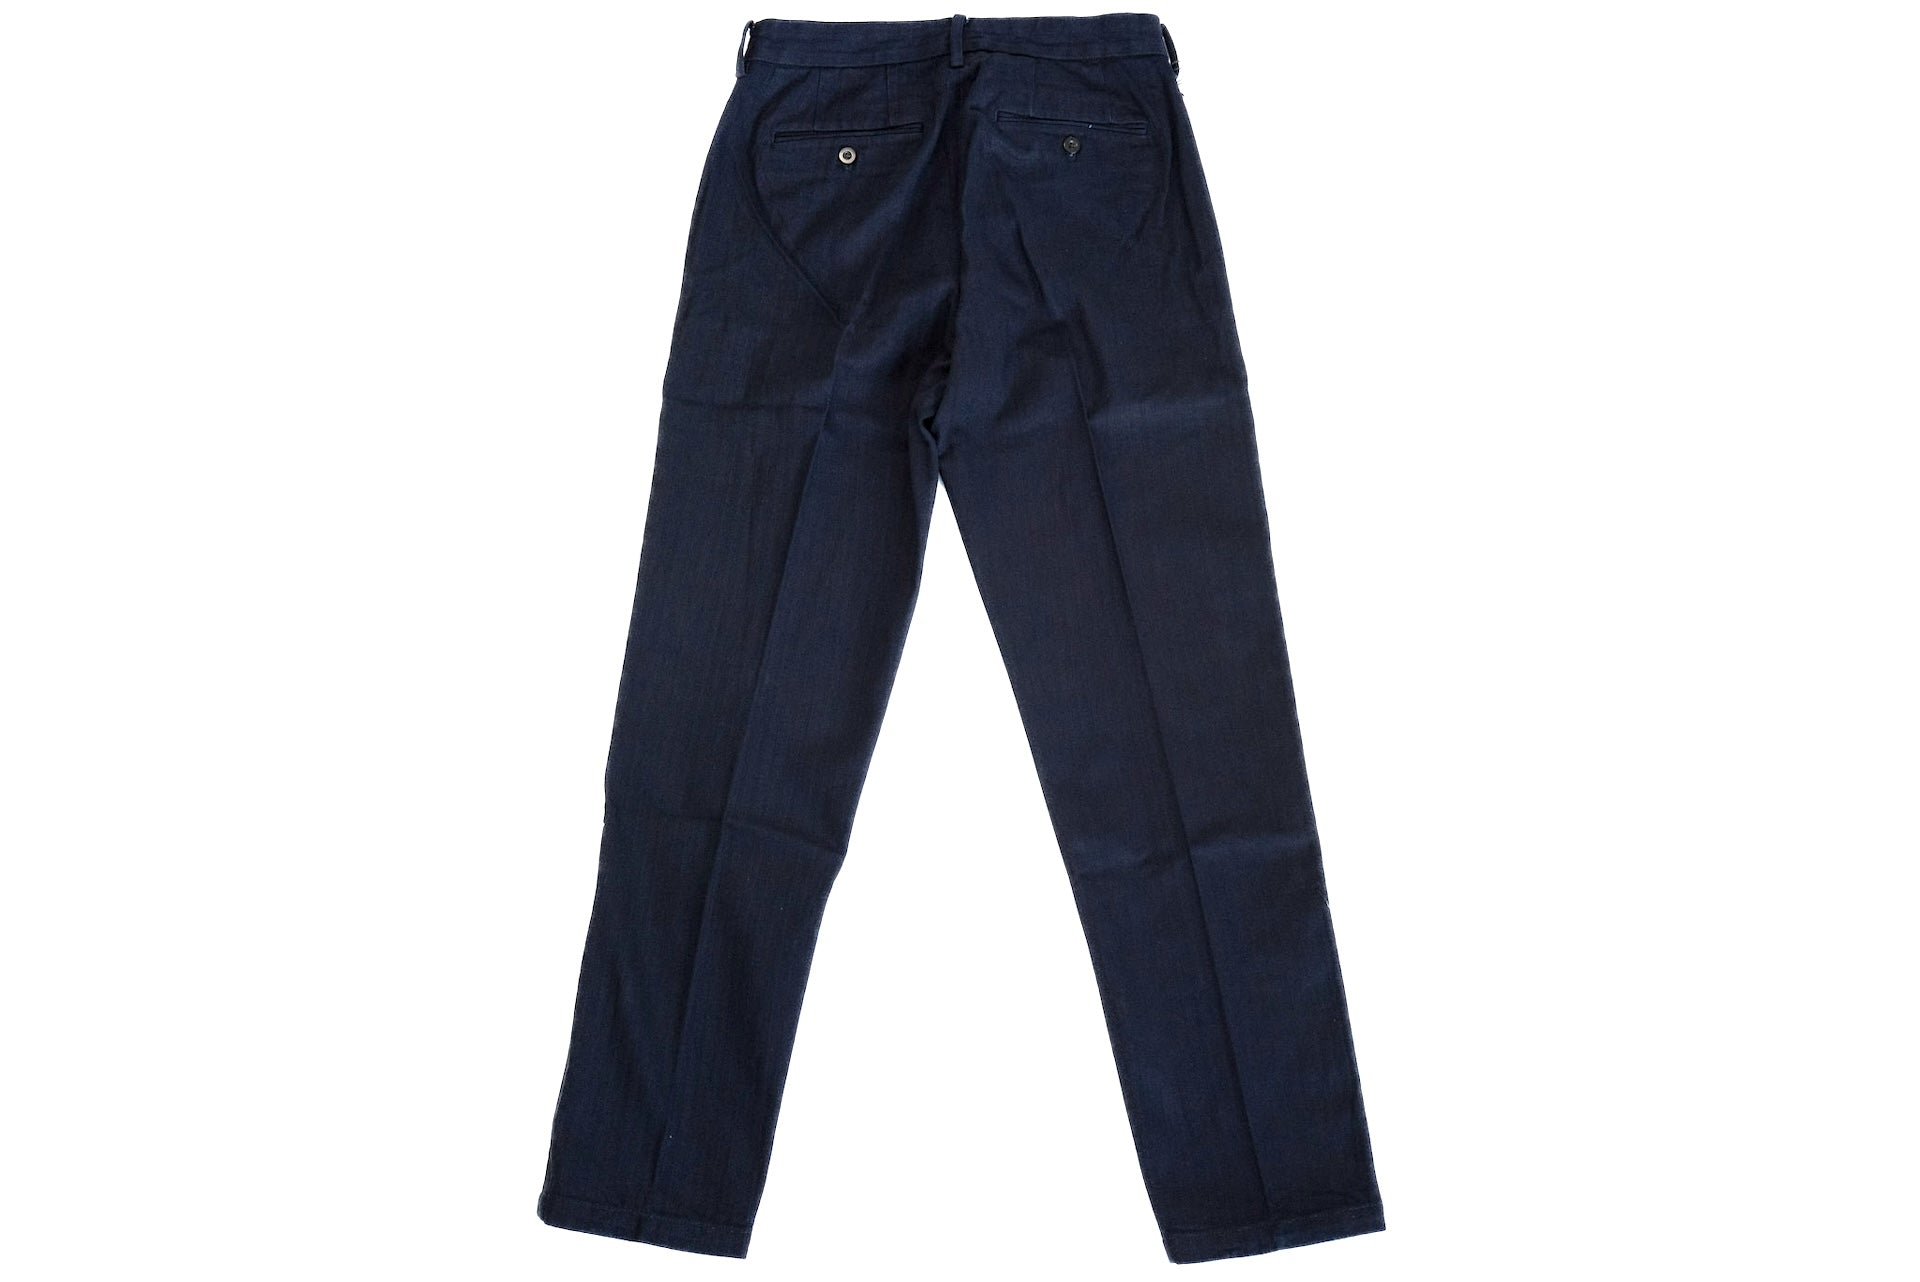 Momotaro 12oz "Supima Cotton" Herringbone Twill Tailored Trousers (Indigo)